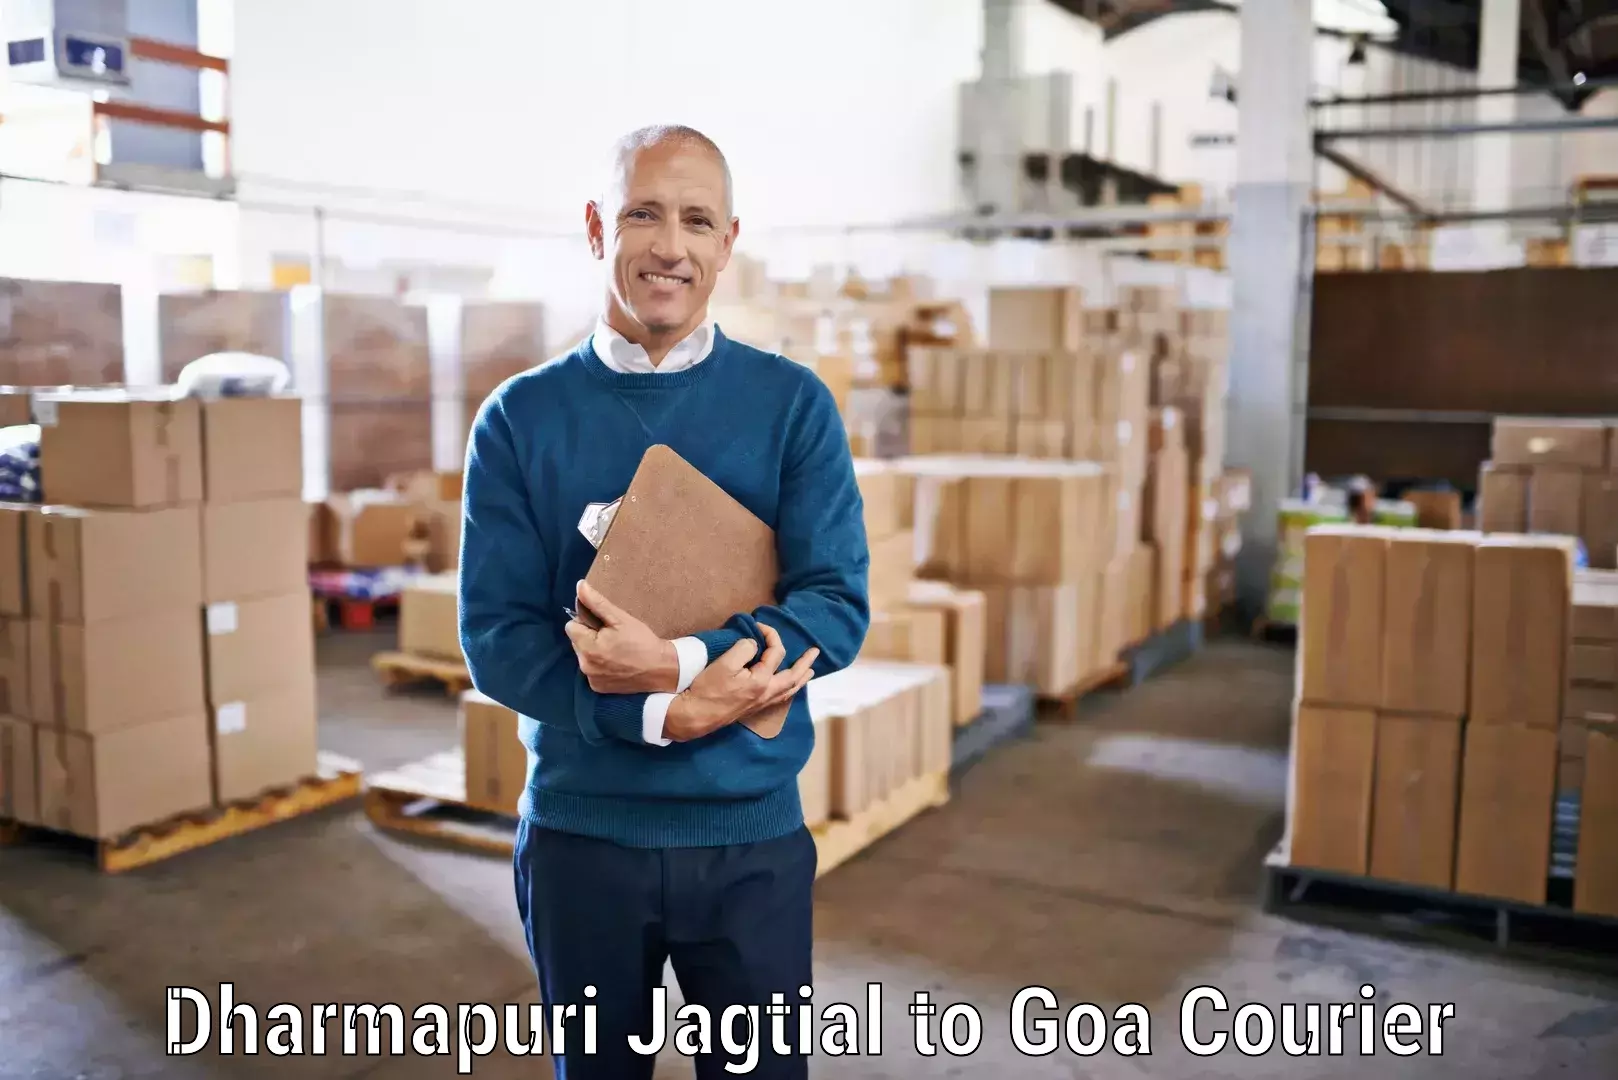 Global courier networks Dharmapuri Jagtial to Goa University